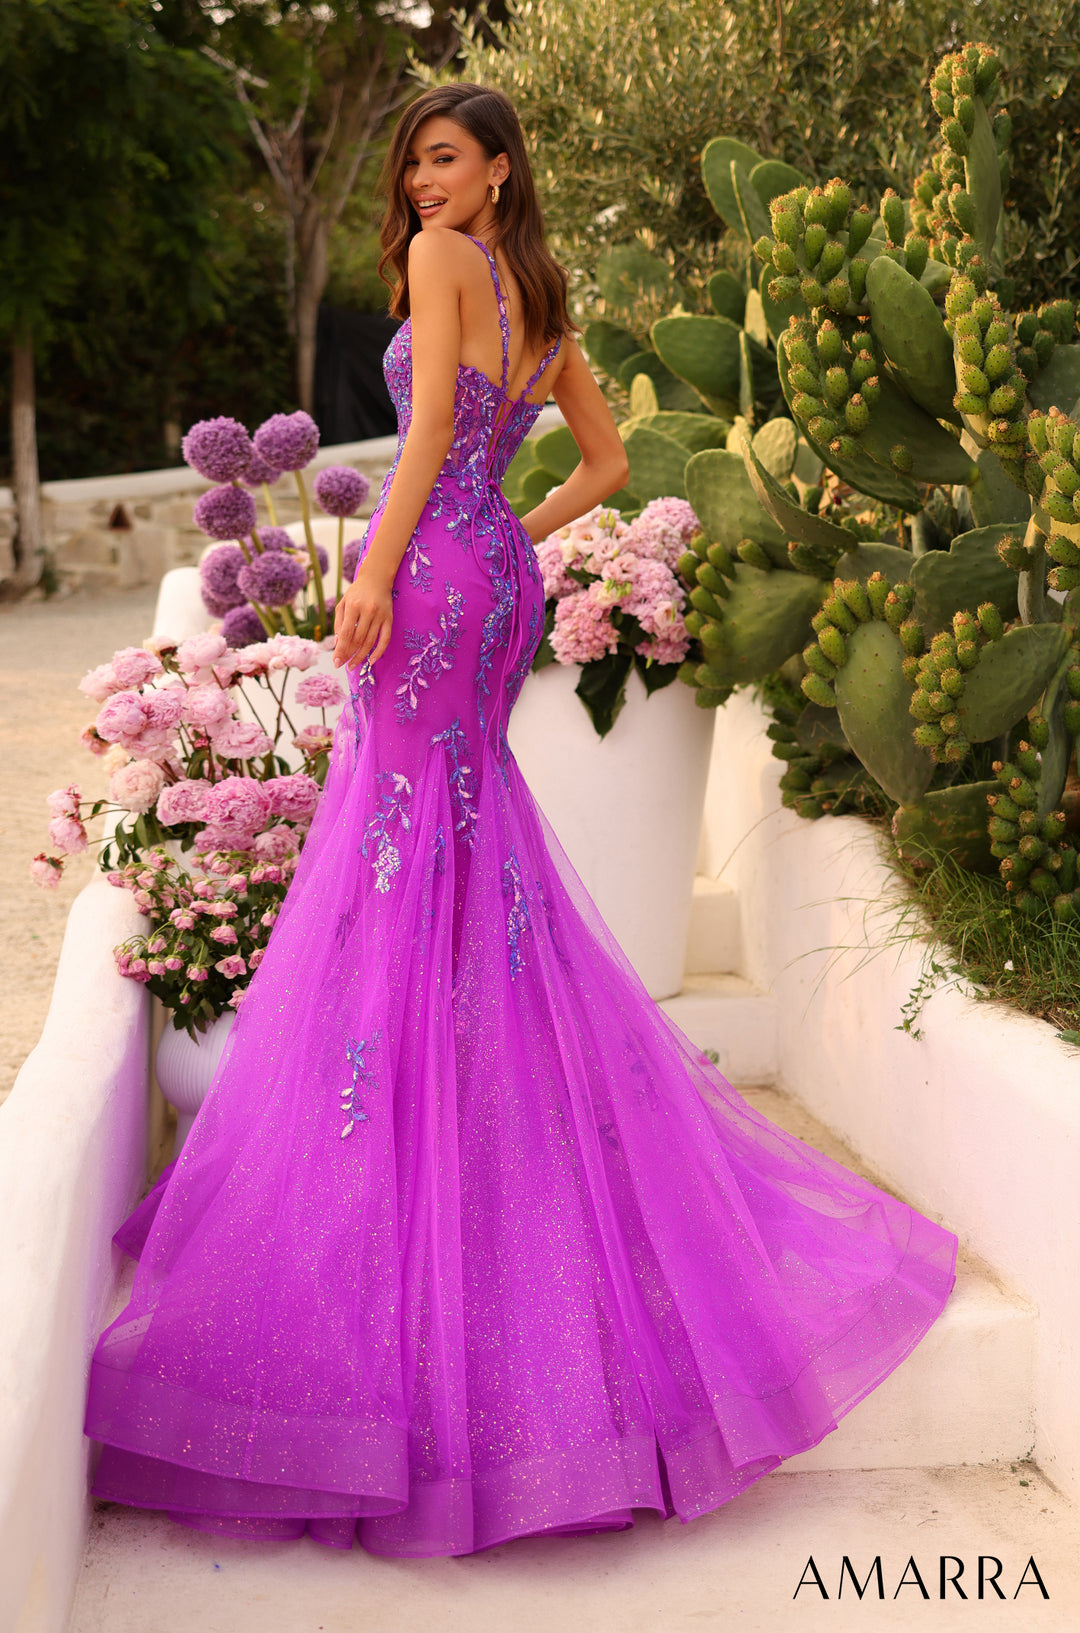 Applique Sleeveless Corset Mermaid Dress by Amarra 88755